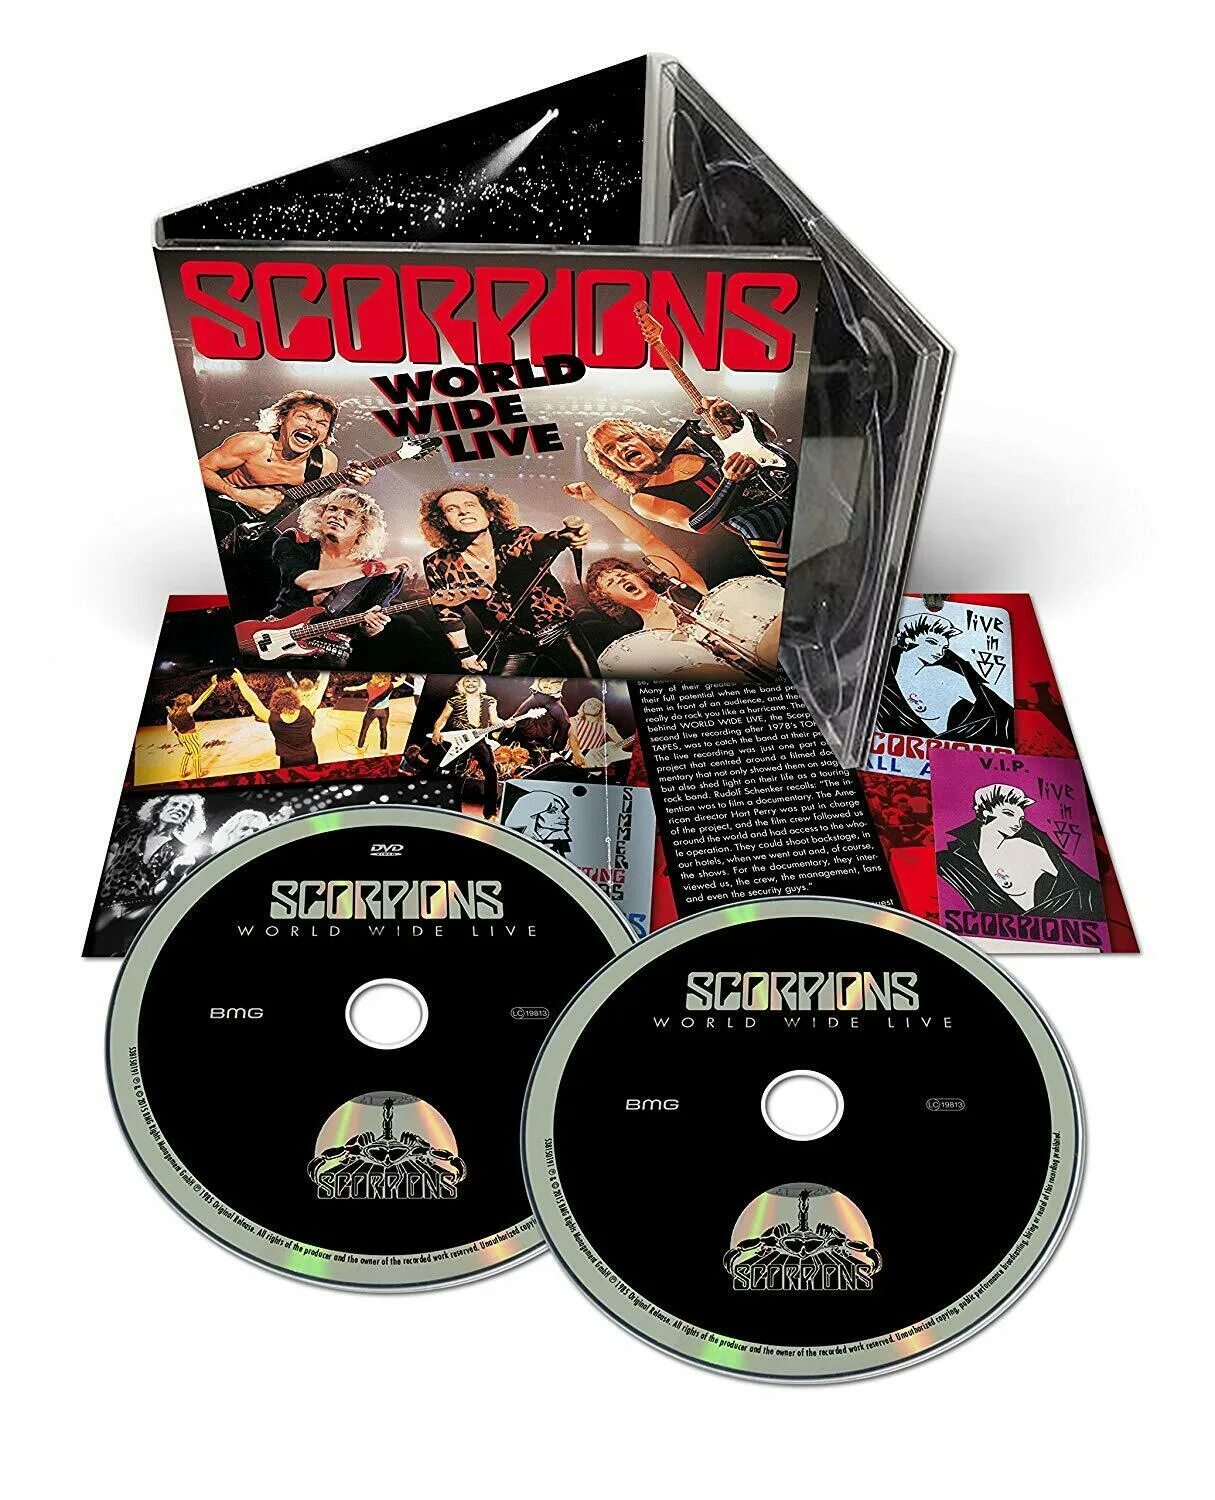 Scorpions DVD диски. Scorpions "World wide Live". Scorpions - Blackout (50th Anniversary Deluxe Edition) (CD+DVD) обложка DVD. Scorpions DVD концерты.